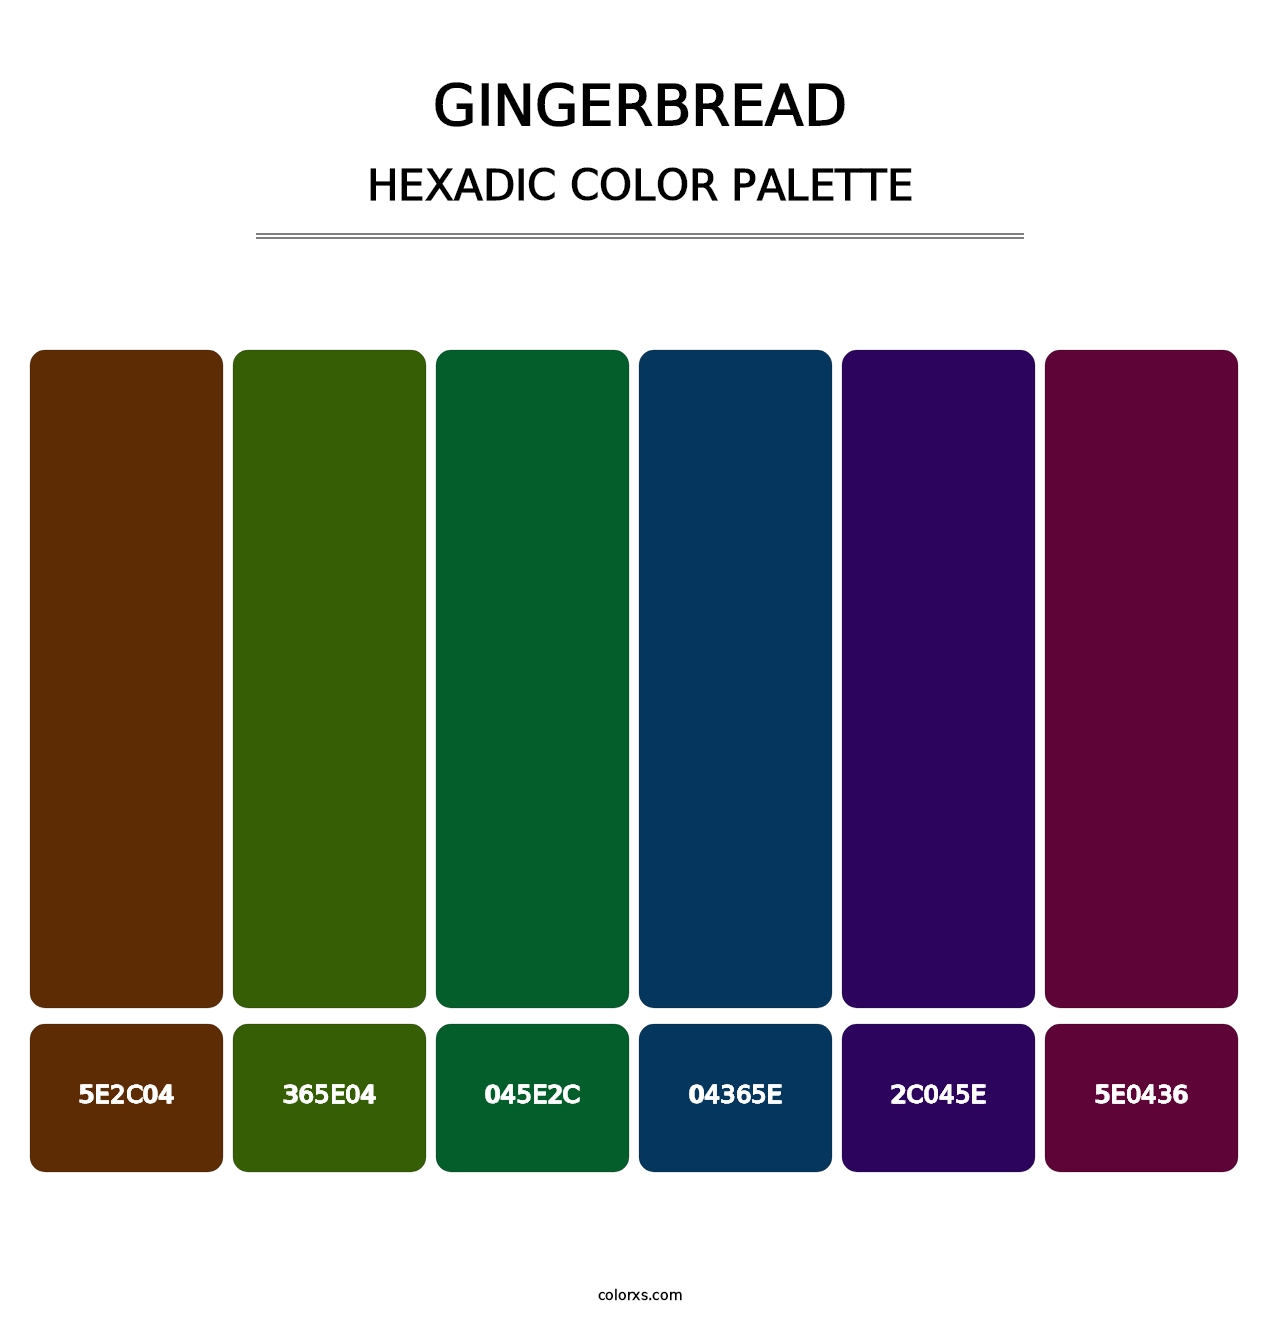 Gingerbread - Hexadic Color Palette